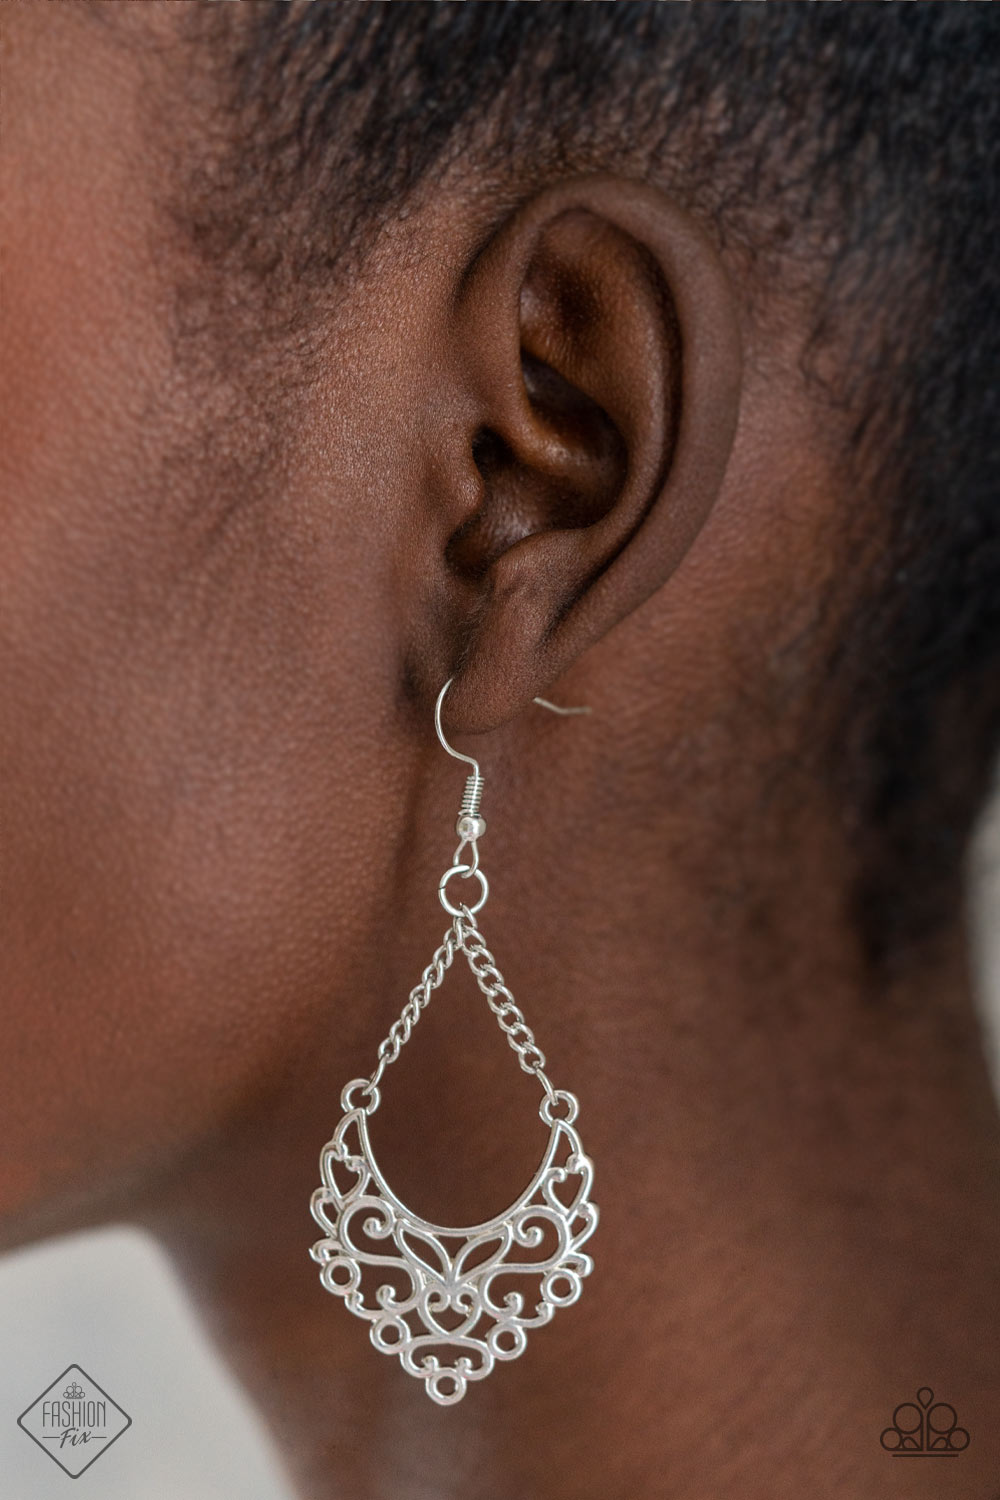 Sentimental Setting - Silver Earrings - Fashion Fix